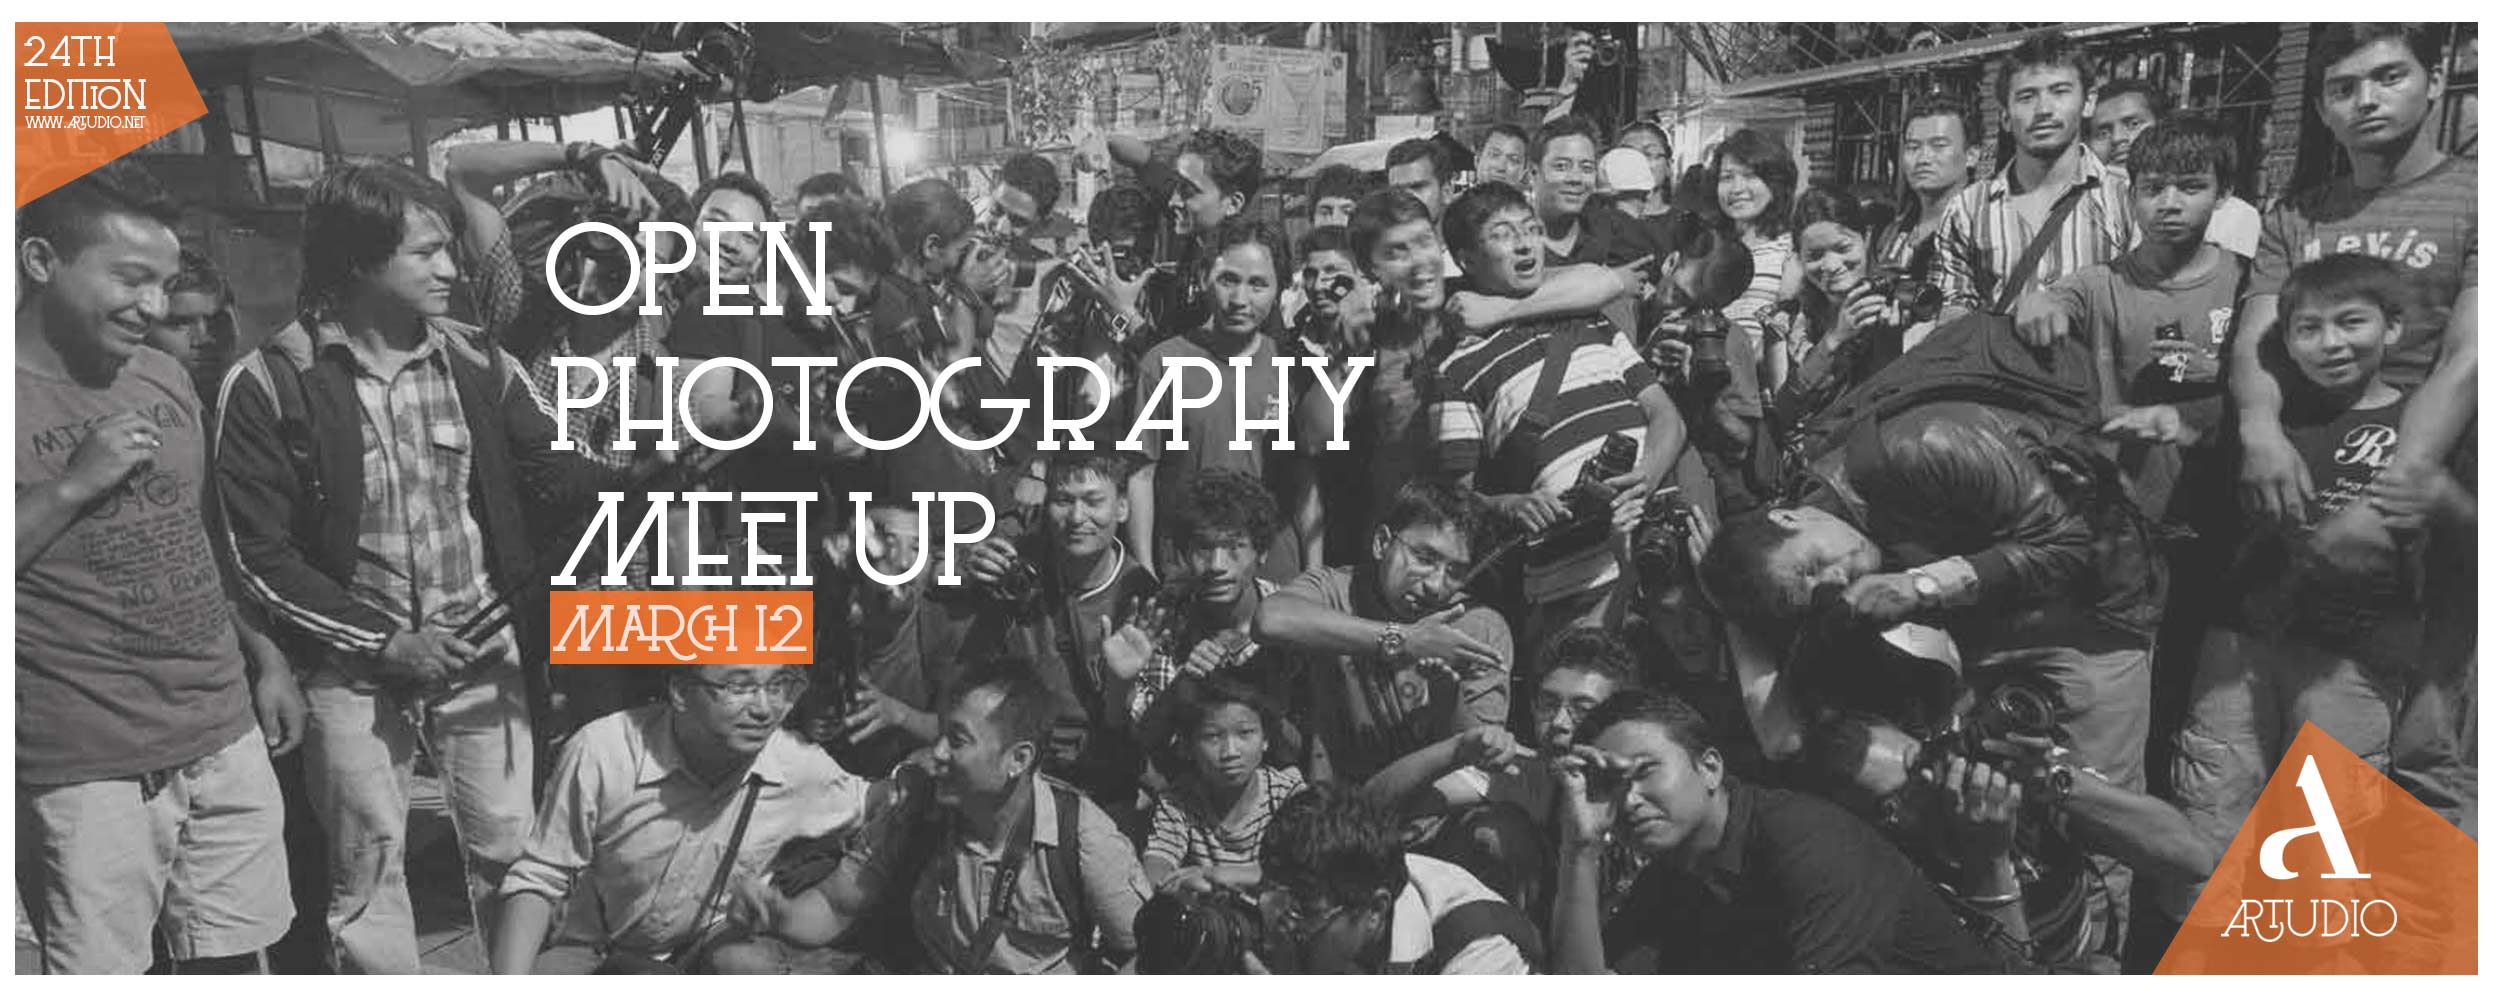 Artudio Open Photography Meetup [34th Edition] post thumbnail image